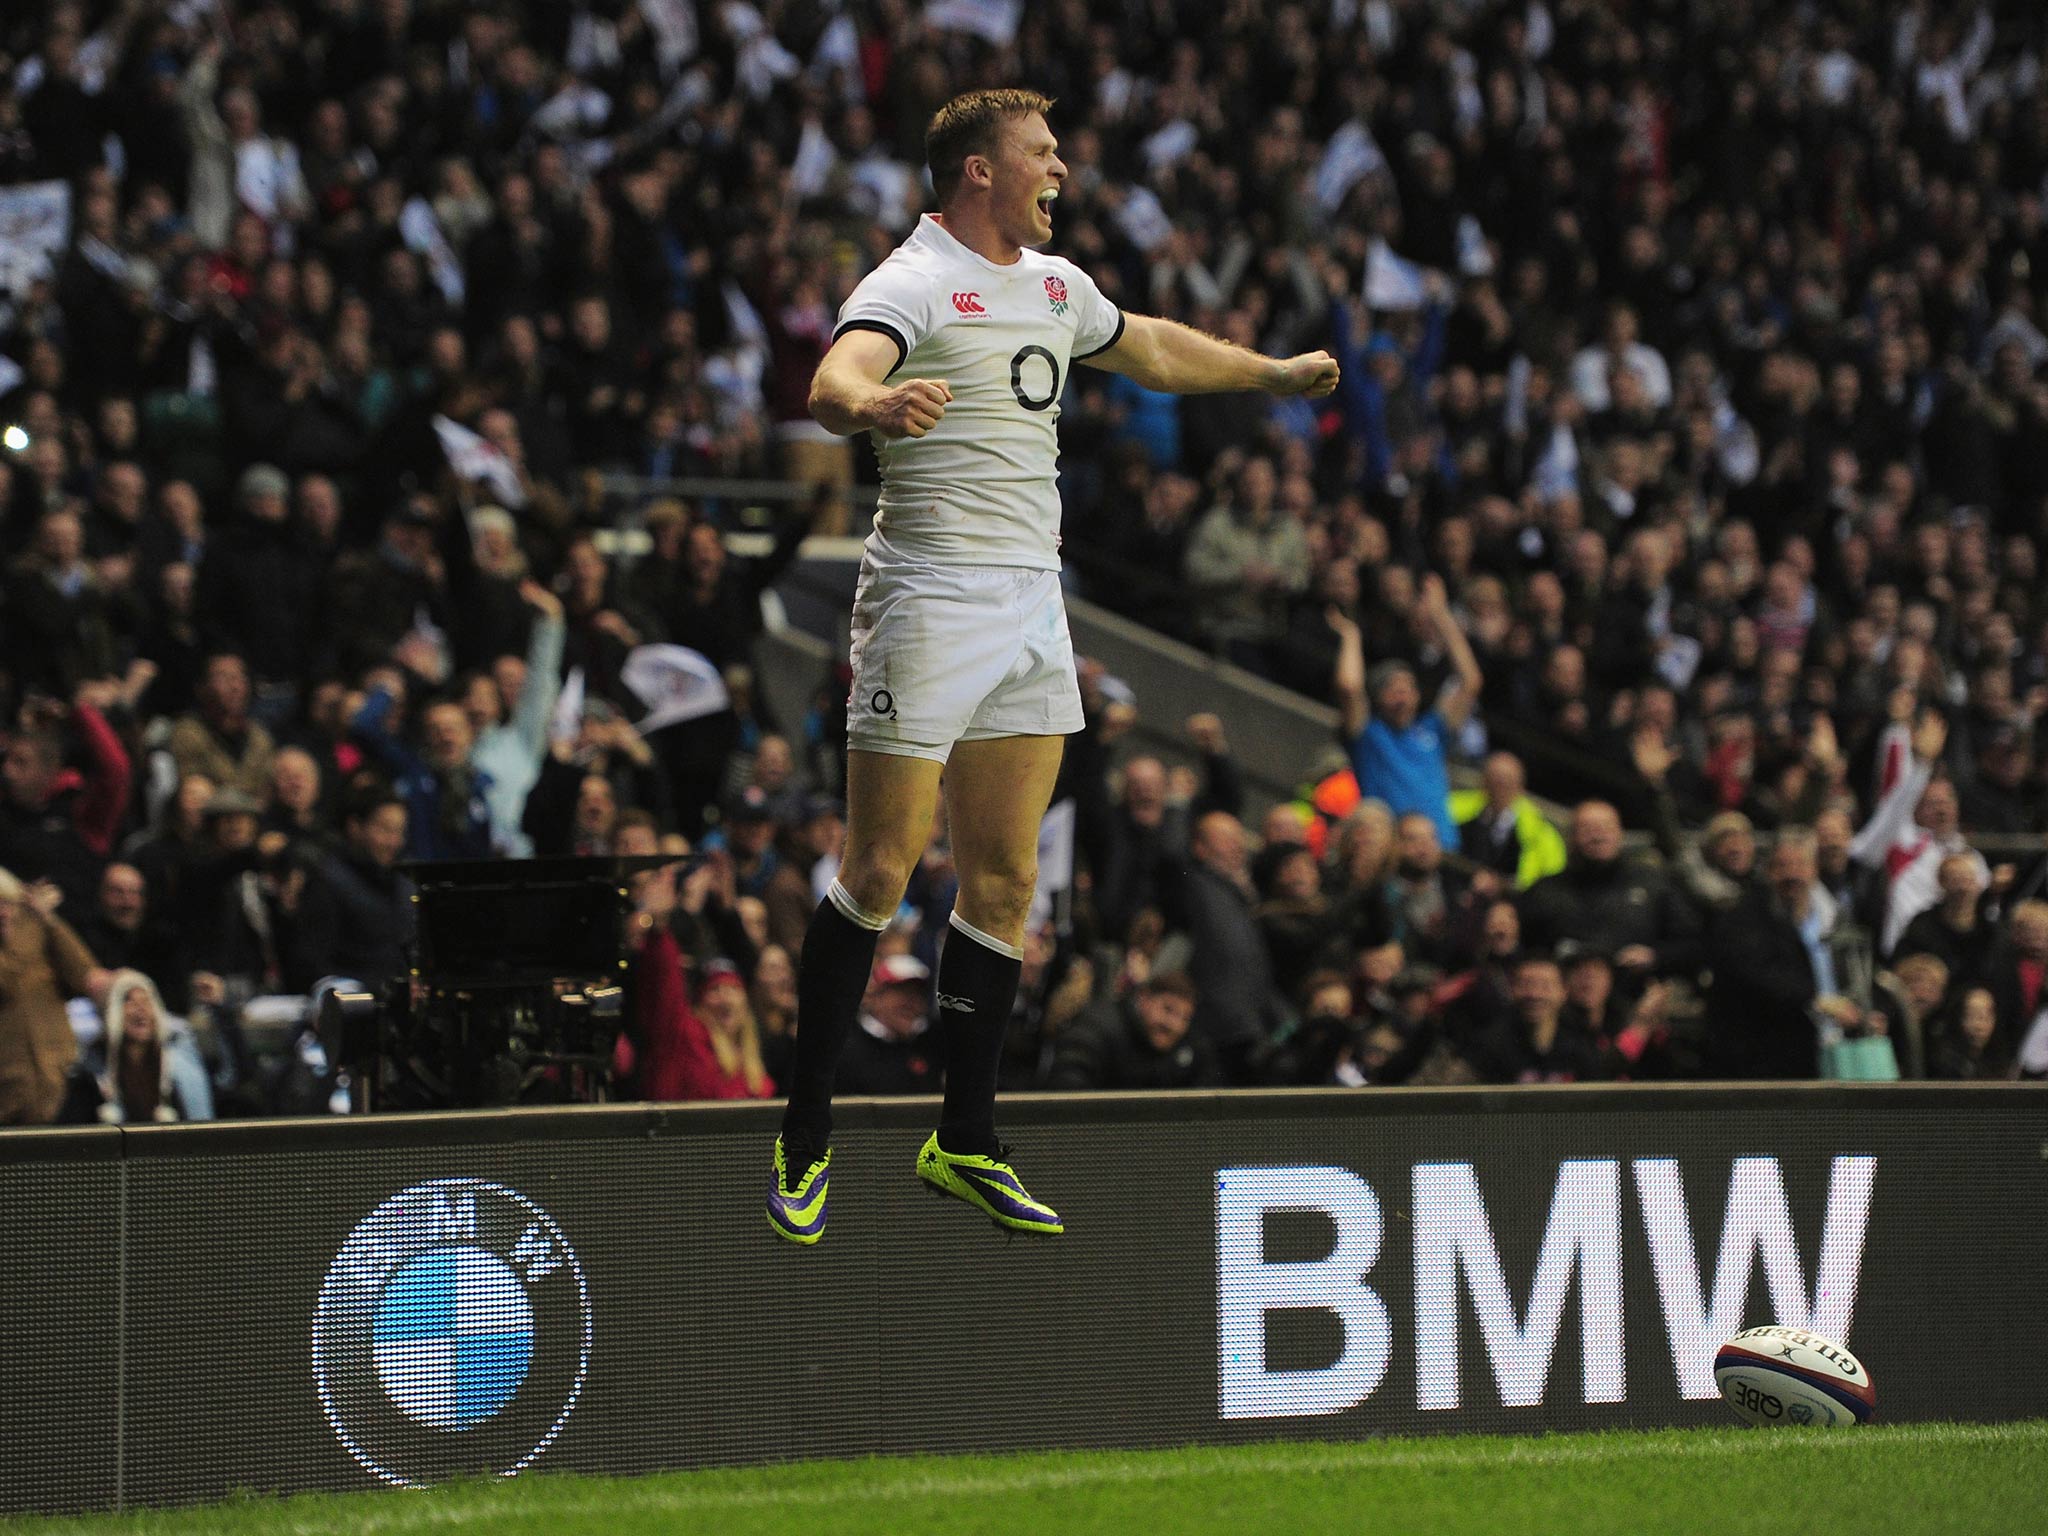 Chris Ashton of England celebrates after scoring a try